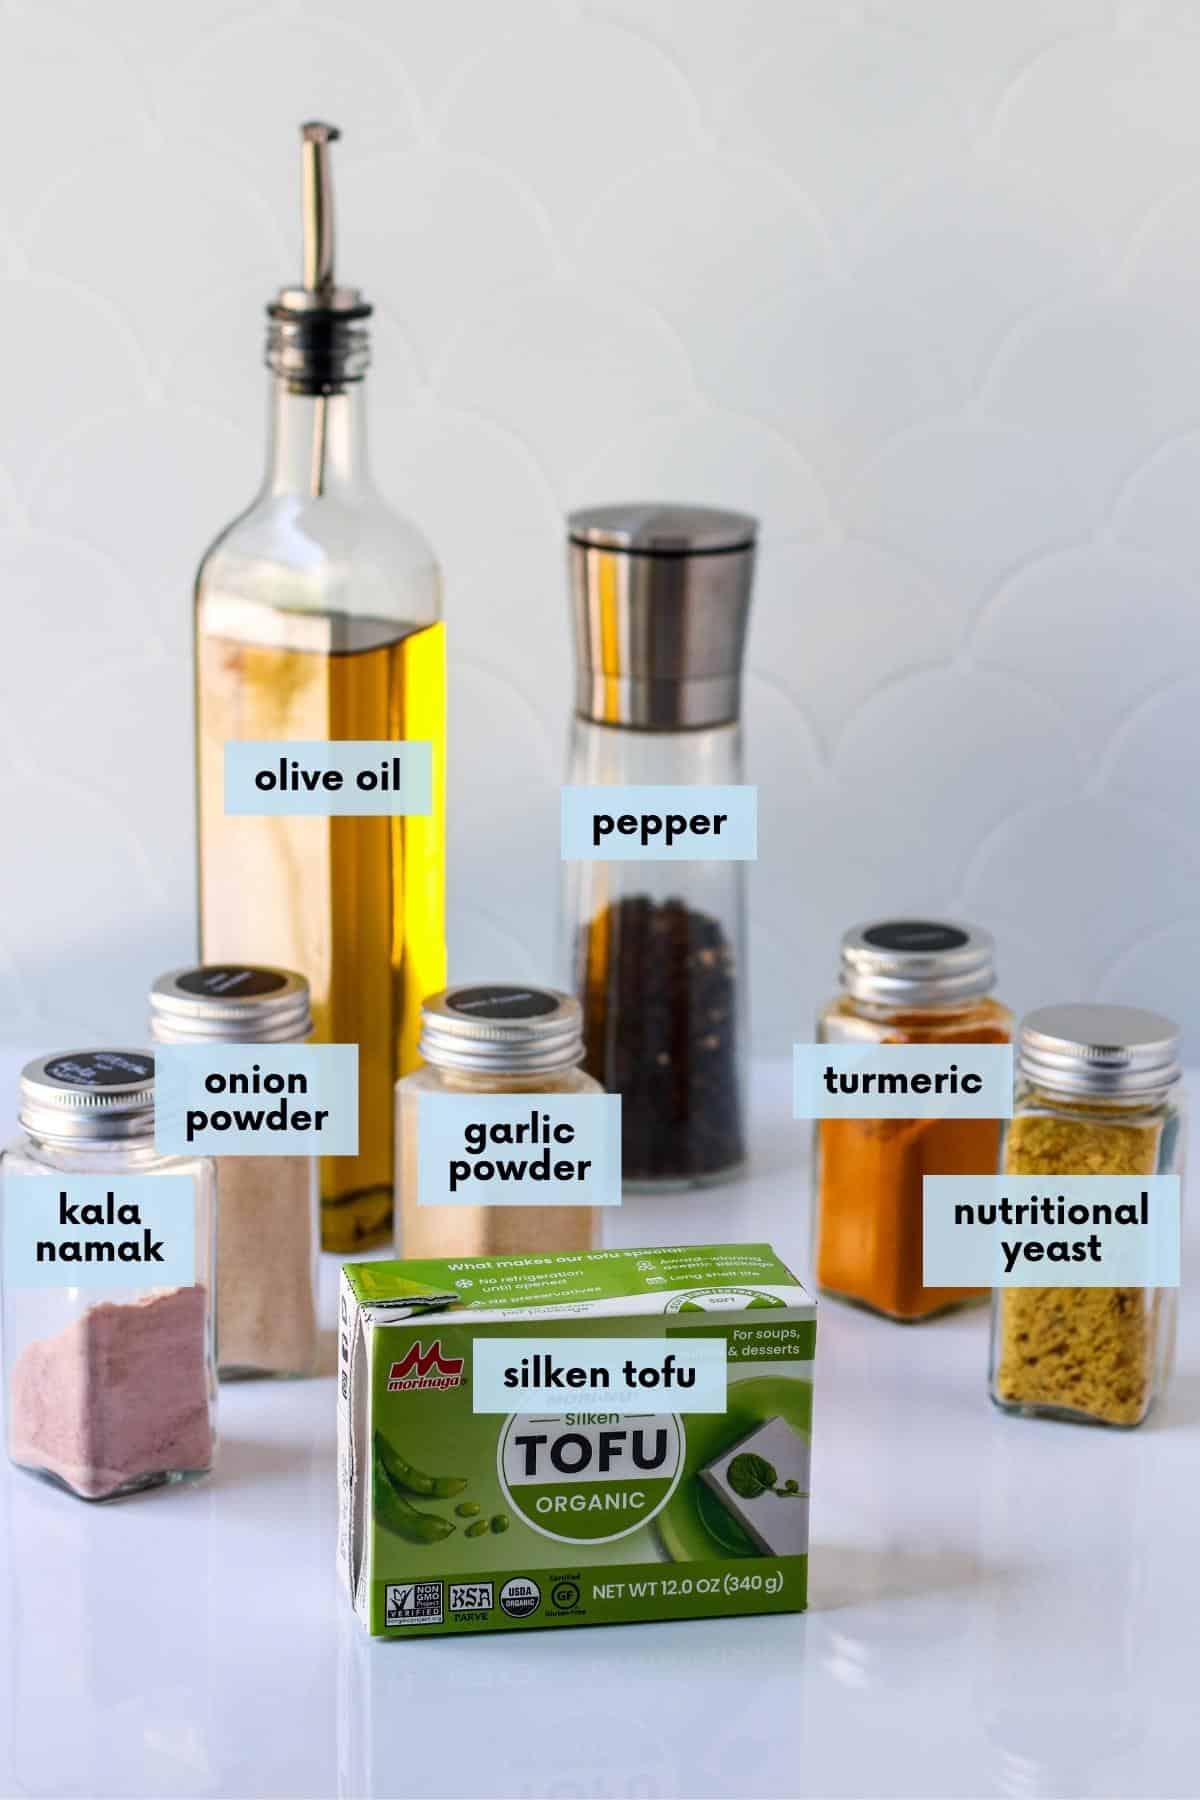 Labeled ingredients needed to make this recipe: Olive oil, pepper, onion powder, garlic powder, turmeric, kala namak, box of silken tofu, and nutritional yeast.